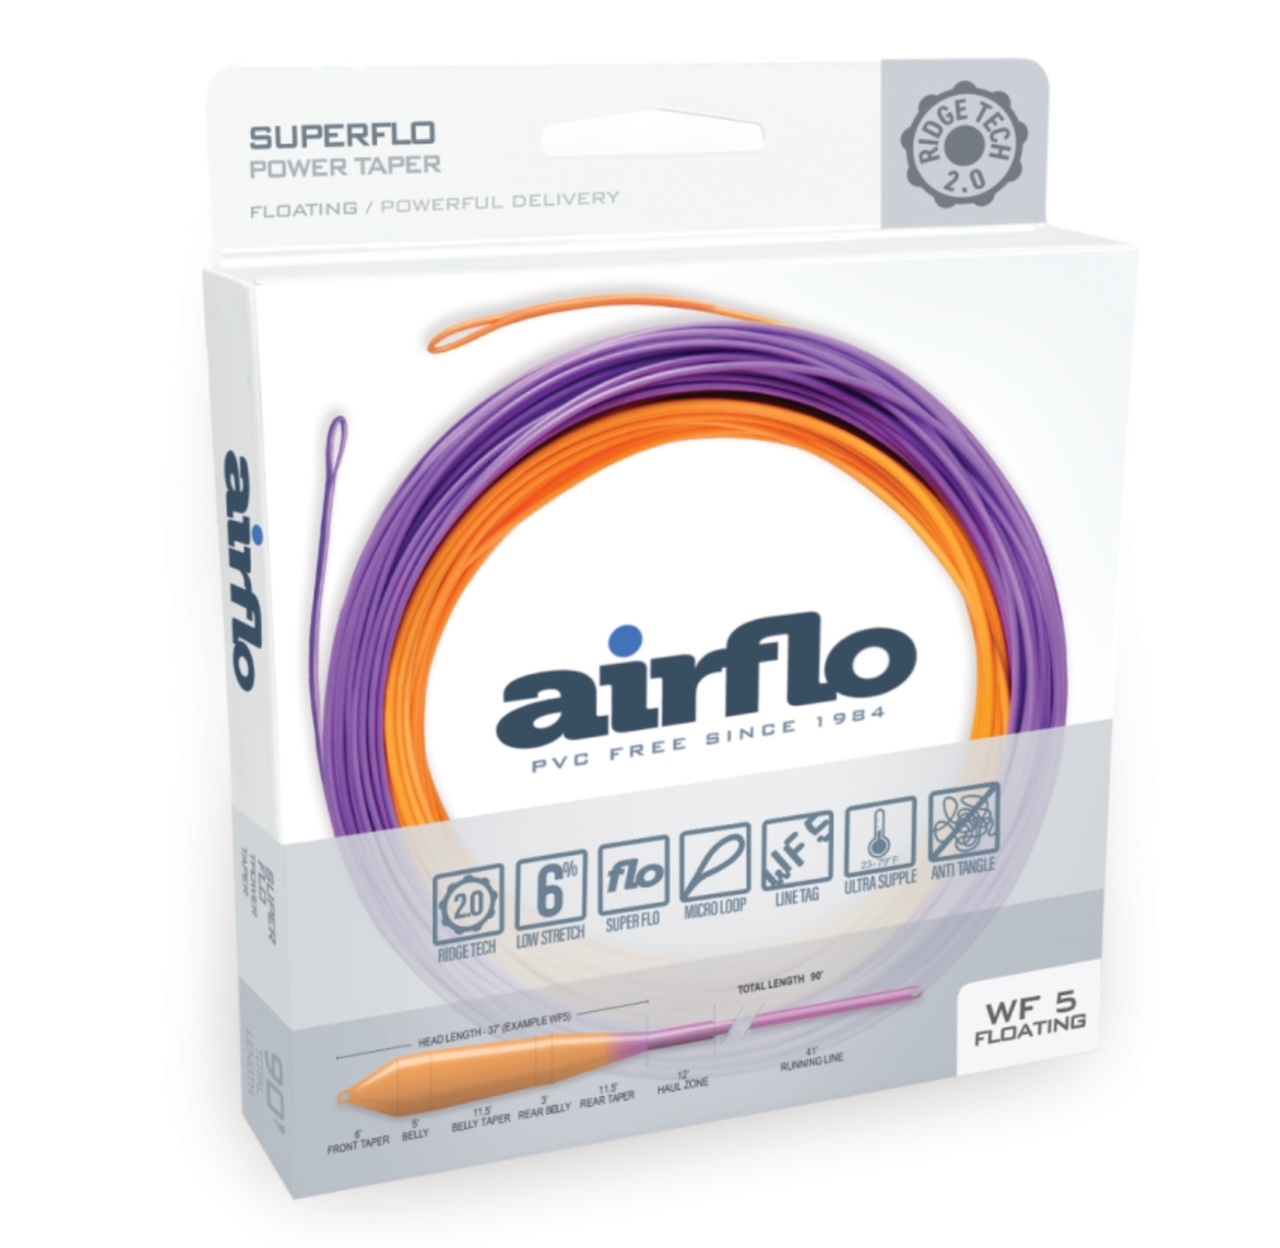 Airflo Superflo Ridge 2.0 Power Taper